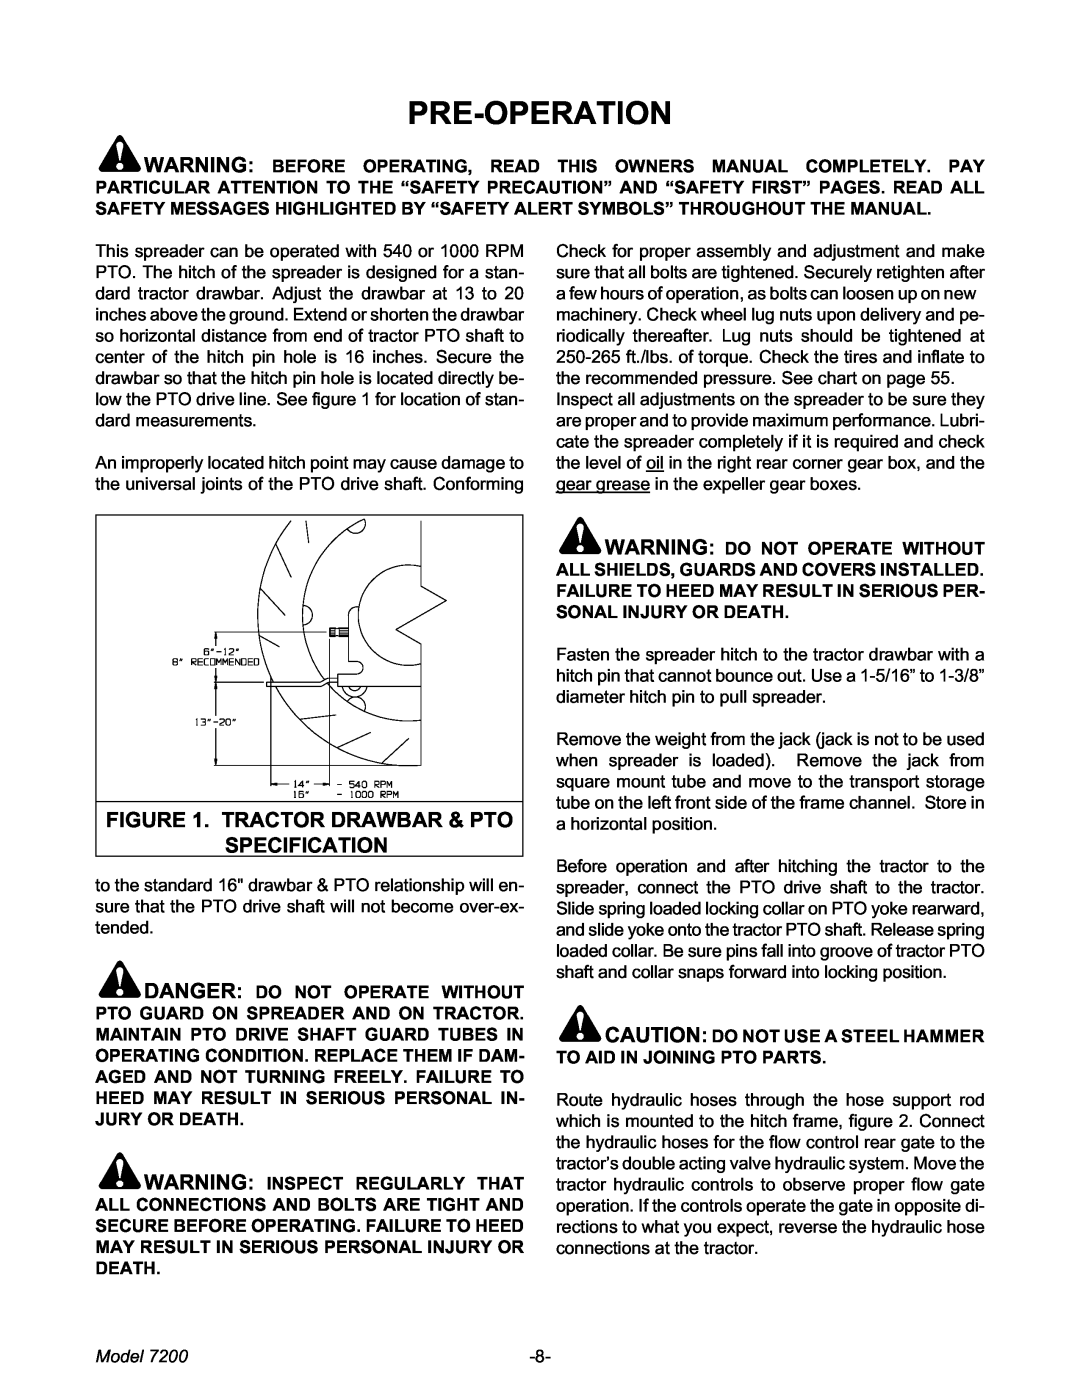 Meyer 7200 manual Pre-Operation, Tractor Drawbar & Pto Specification, Model 